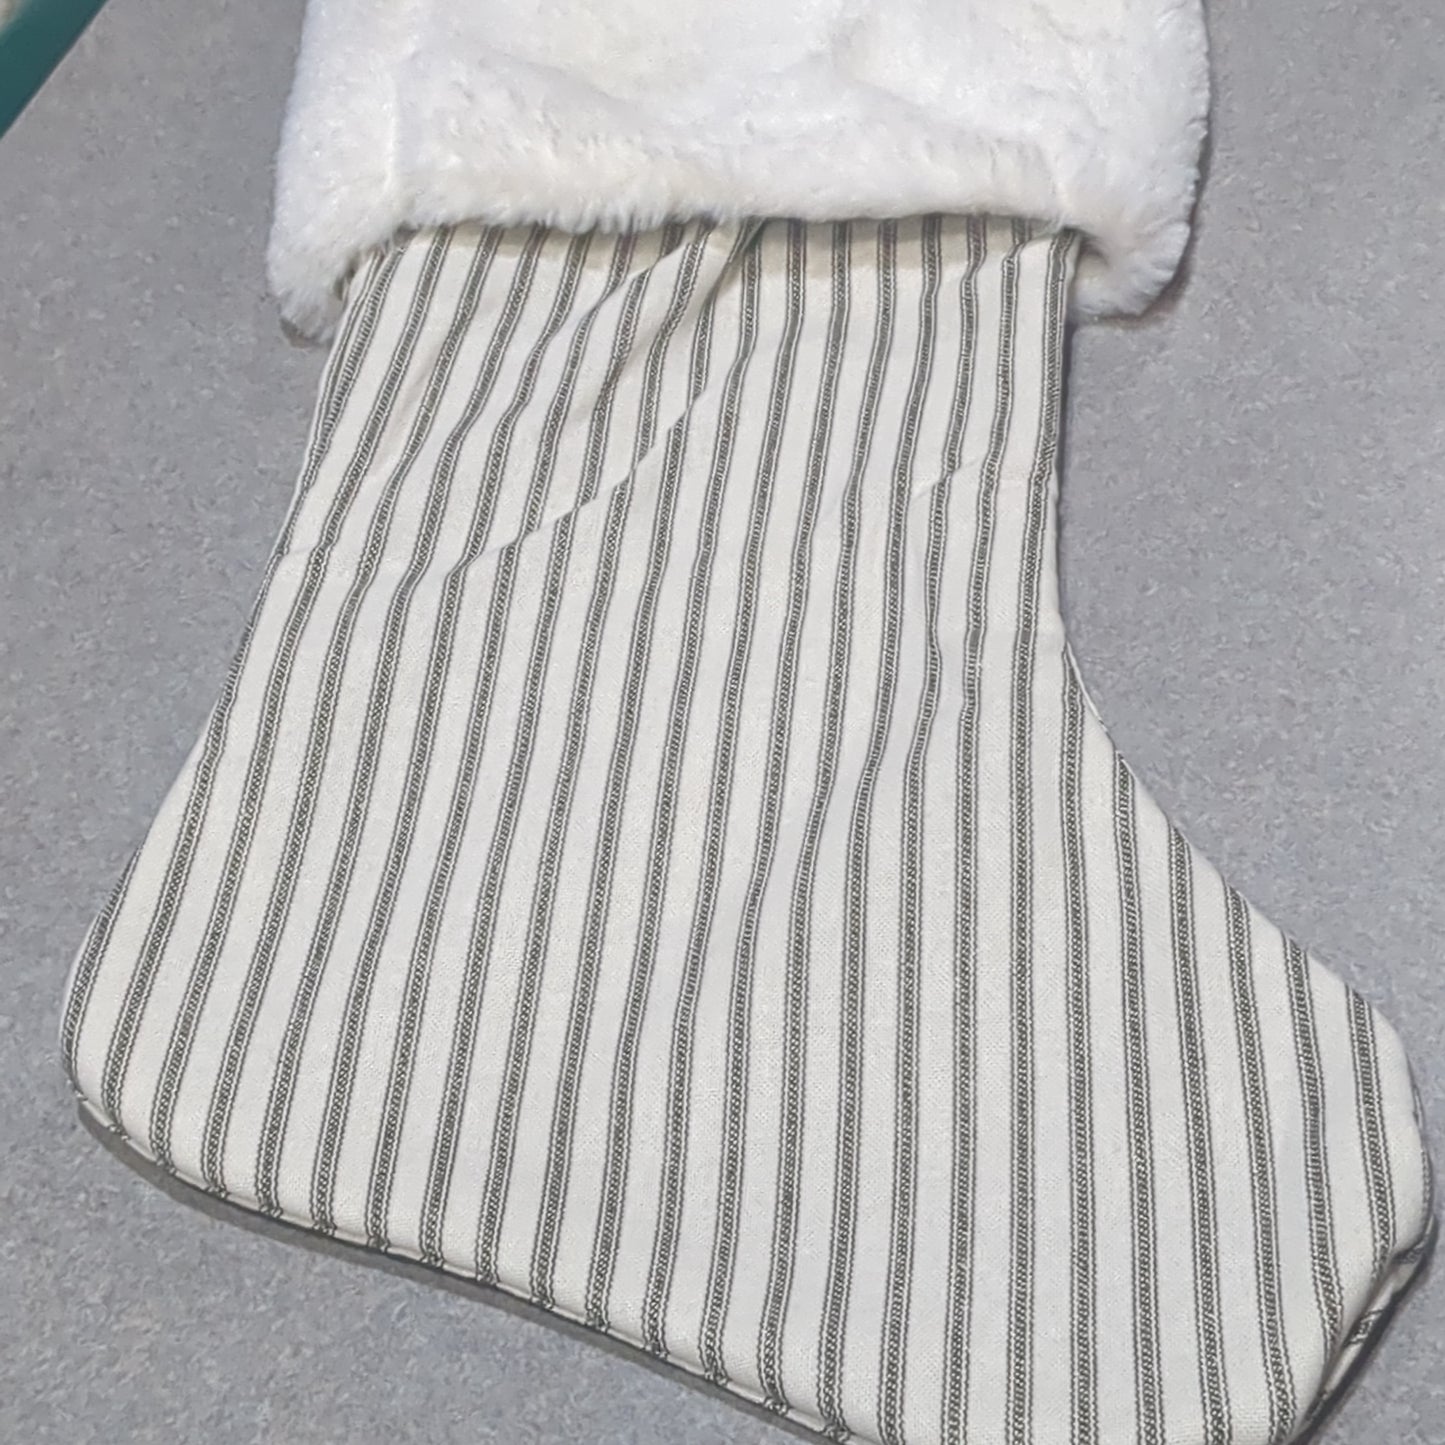 Stocking white with grey stripes.  Fuzzy white upper cufft